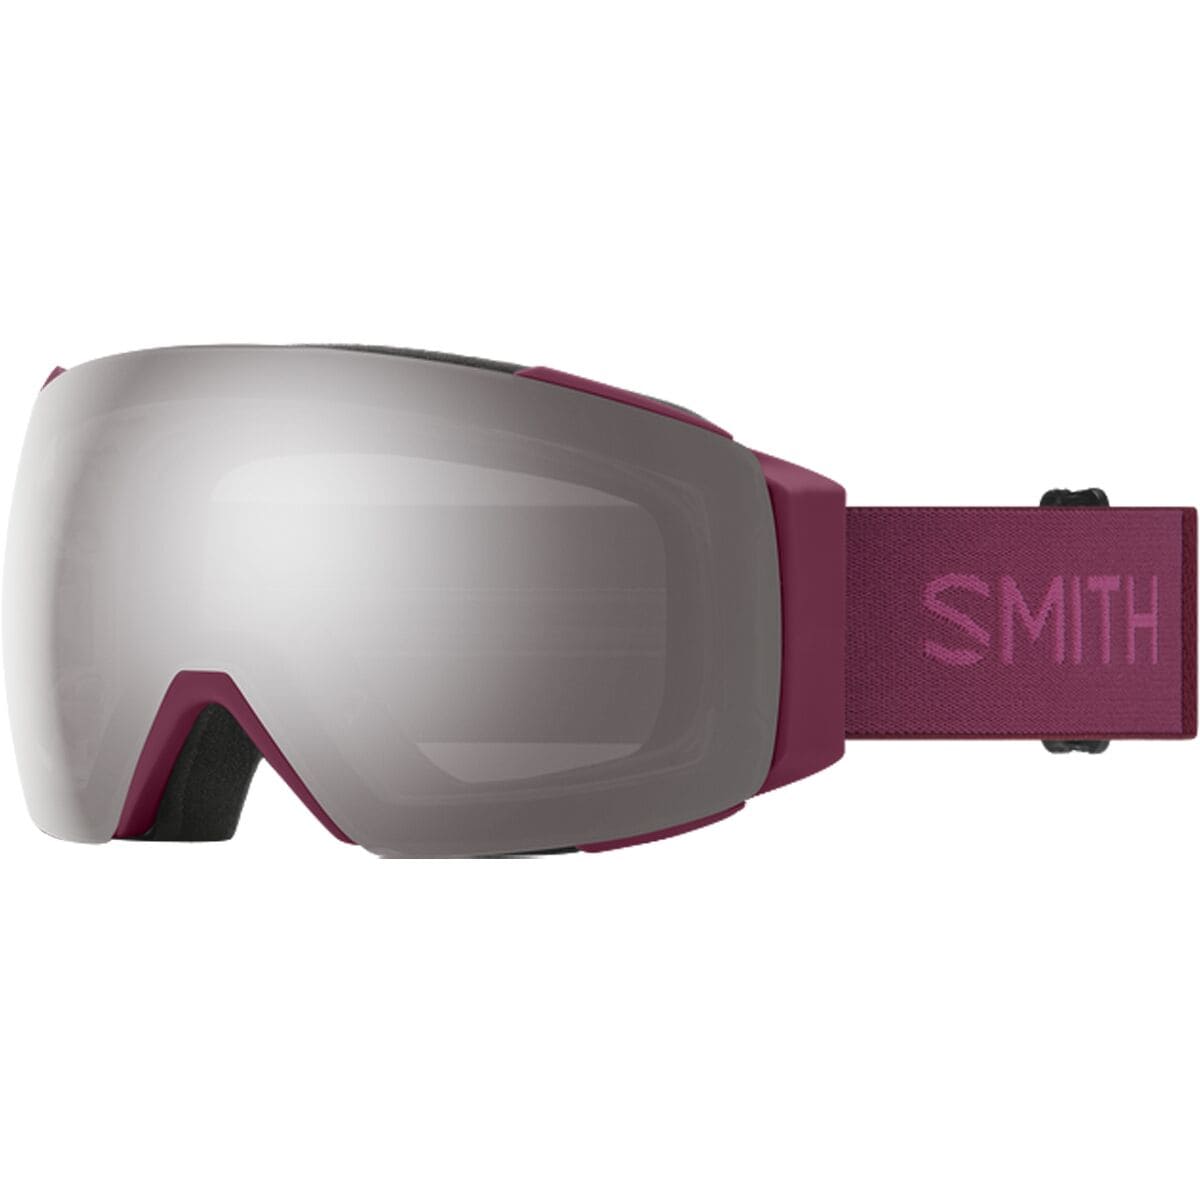 Smith I/O MAG ChromaPop Goggles - Ski | Backcountry